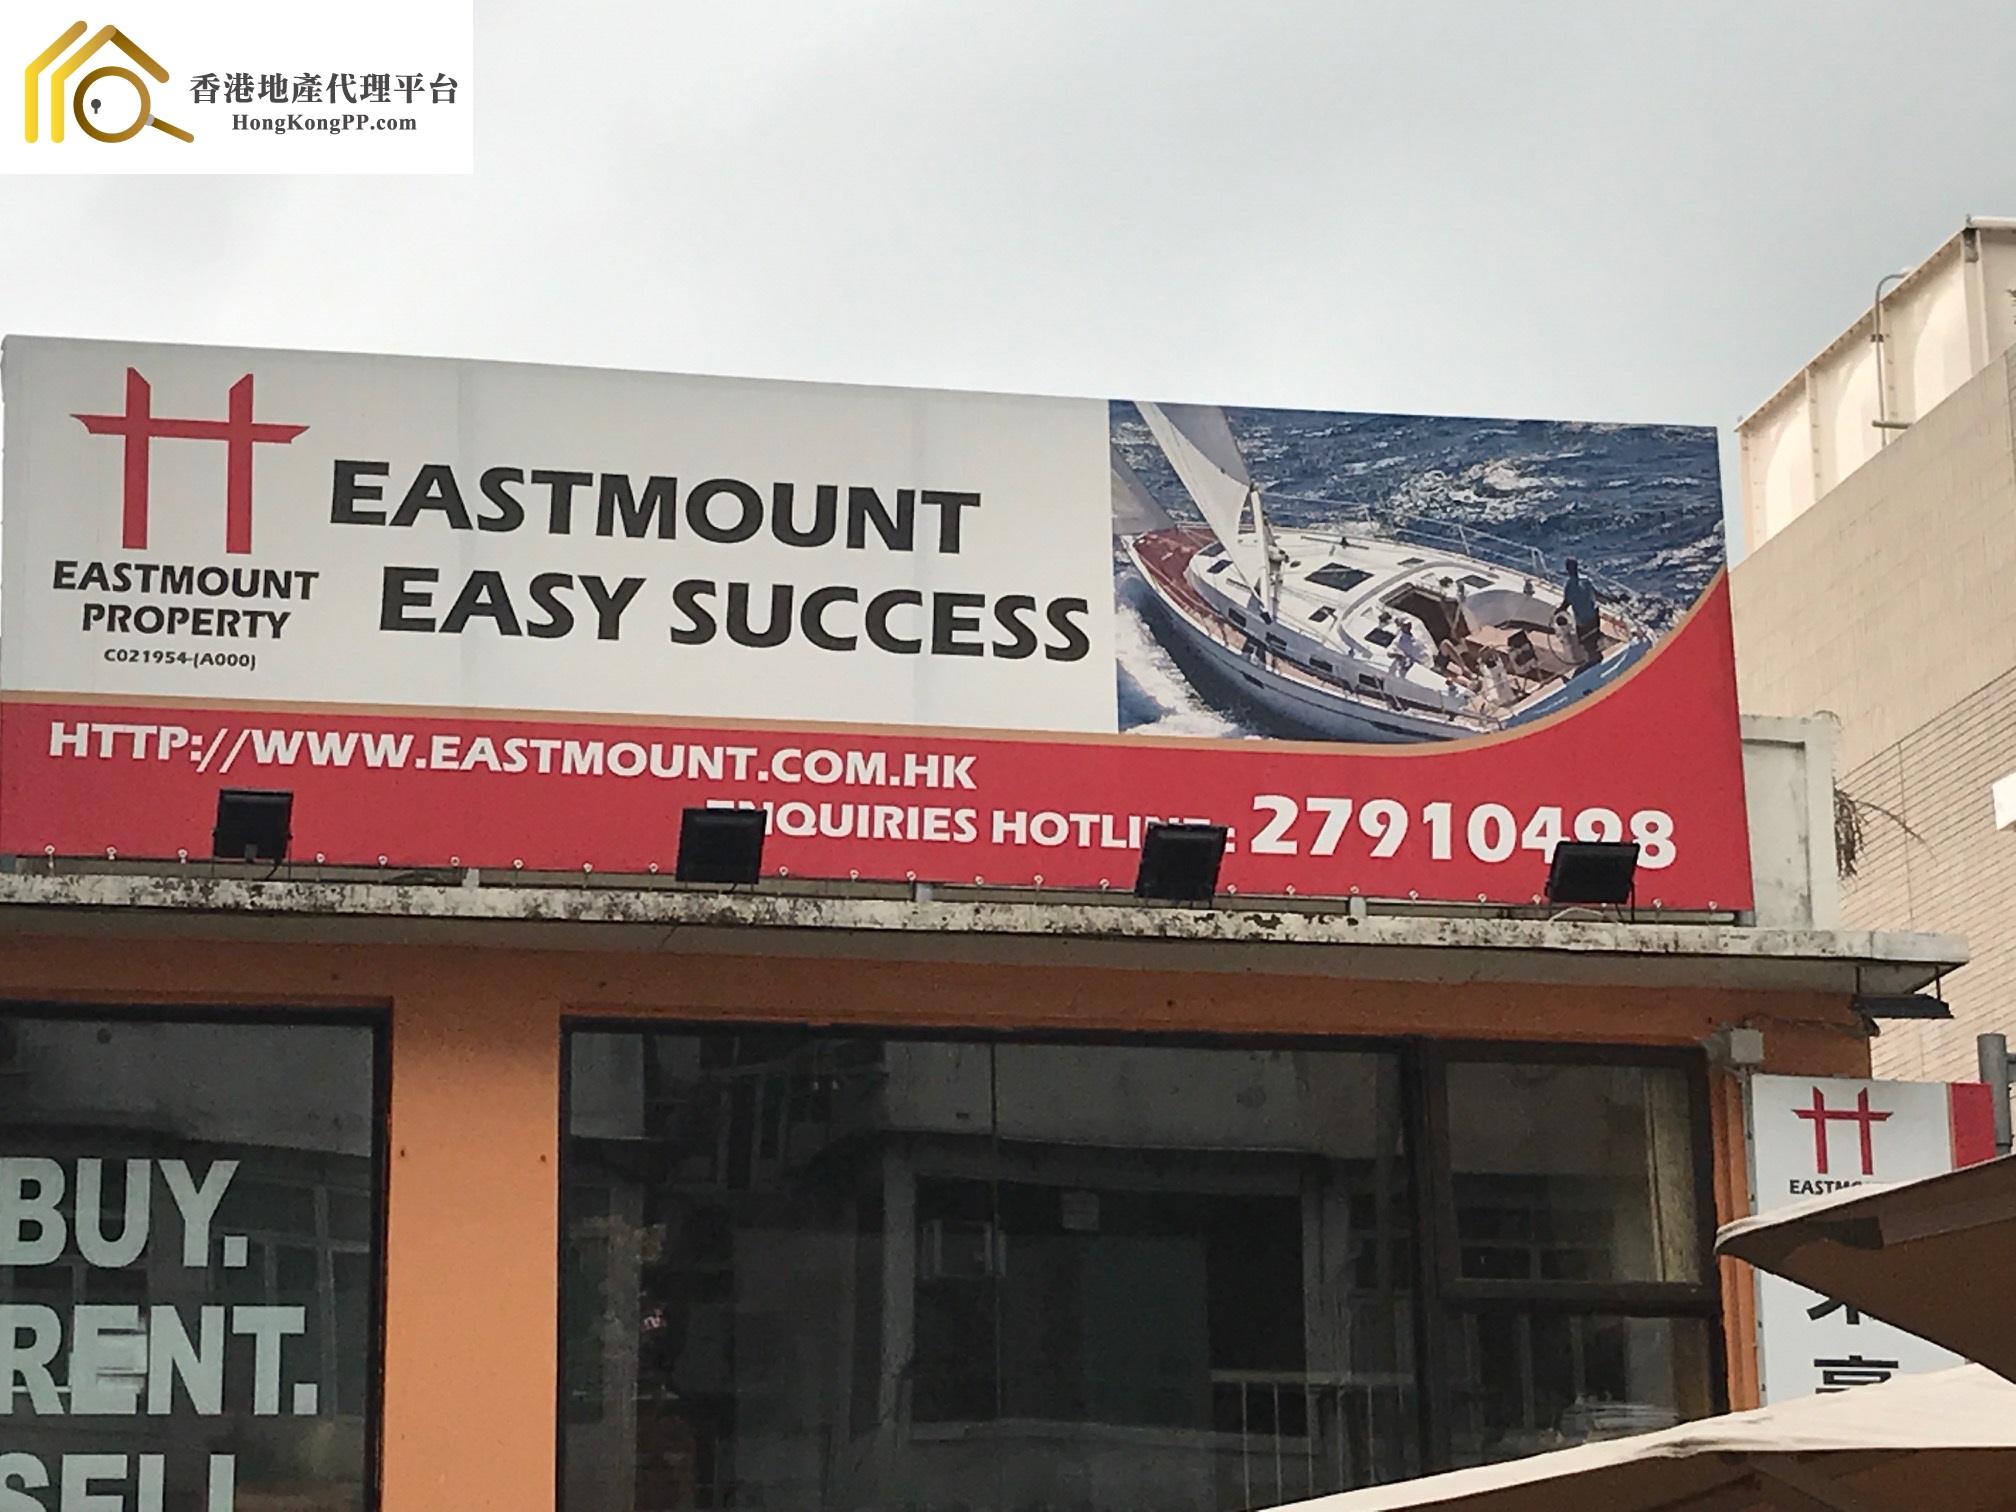 商舖地產代理: Eastmount Property Agency